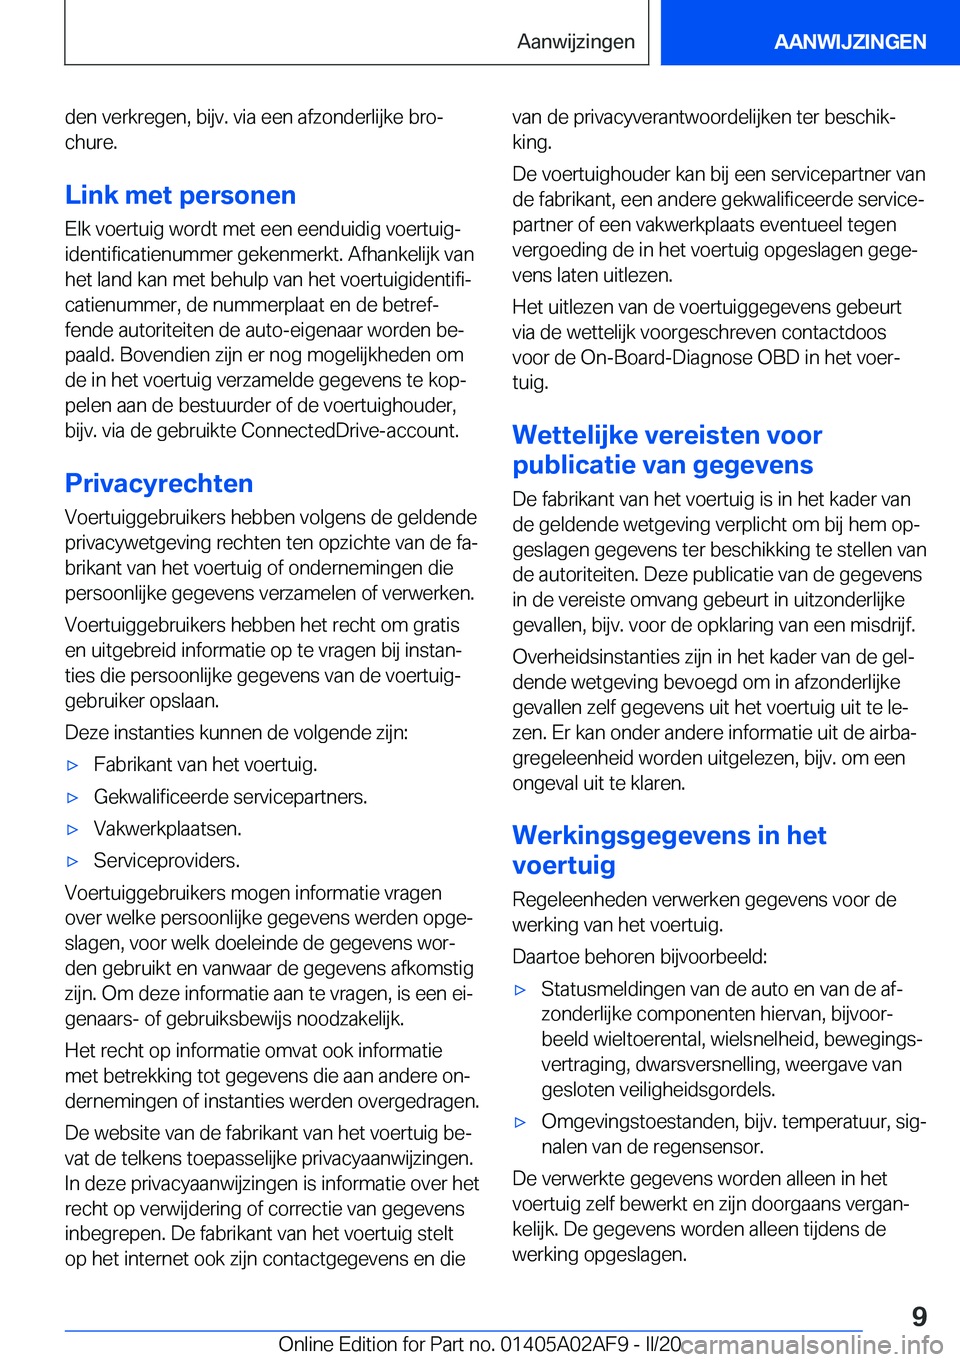 BMW X1 2020  Instructieboekjes (in Dutch) �d�e�n��v�e�r�k�r�e�g�e�n�,��b�i�j�v�.��v�i�a��e�e�n��a�f�z�o�n�d�e�r�l�i�j�k�e��b�r�oj
�c�h�u�r�e�.
�L�i�n�k��m�e�t��p�e�r�s�o�n�e�n�E�l�k��v�o�e�r�t�u�i�g��w�o�r�d�t��m�e�t��e�e�n��e�e